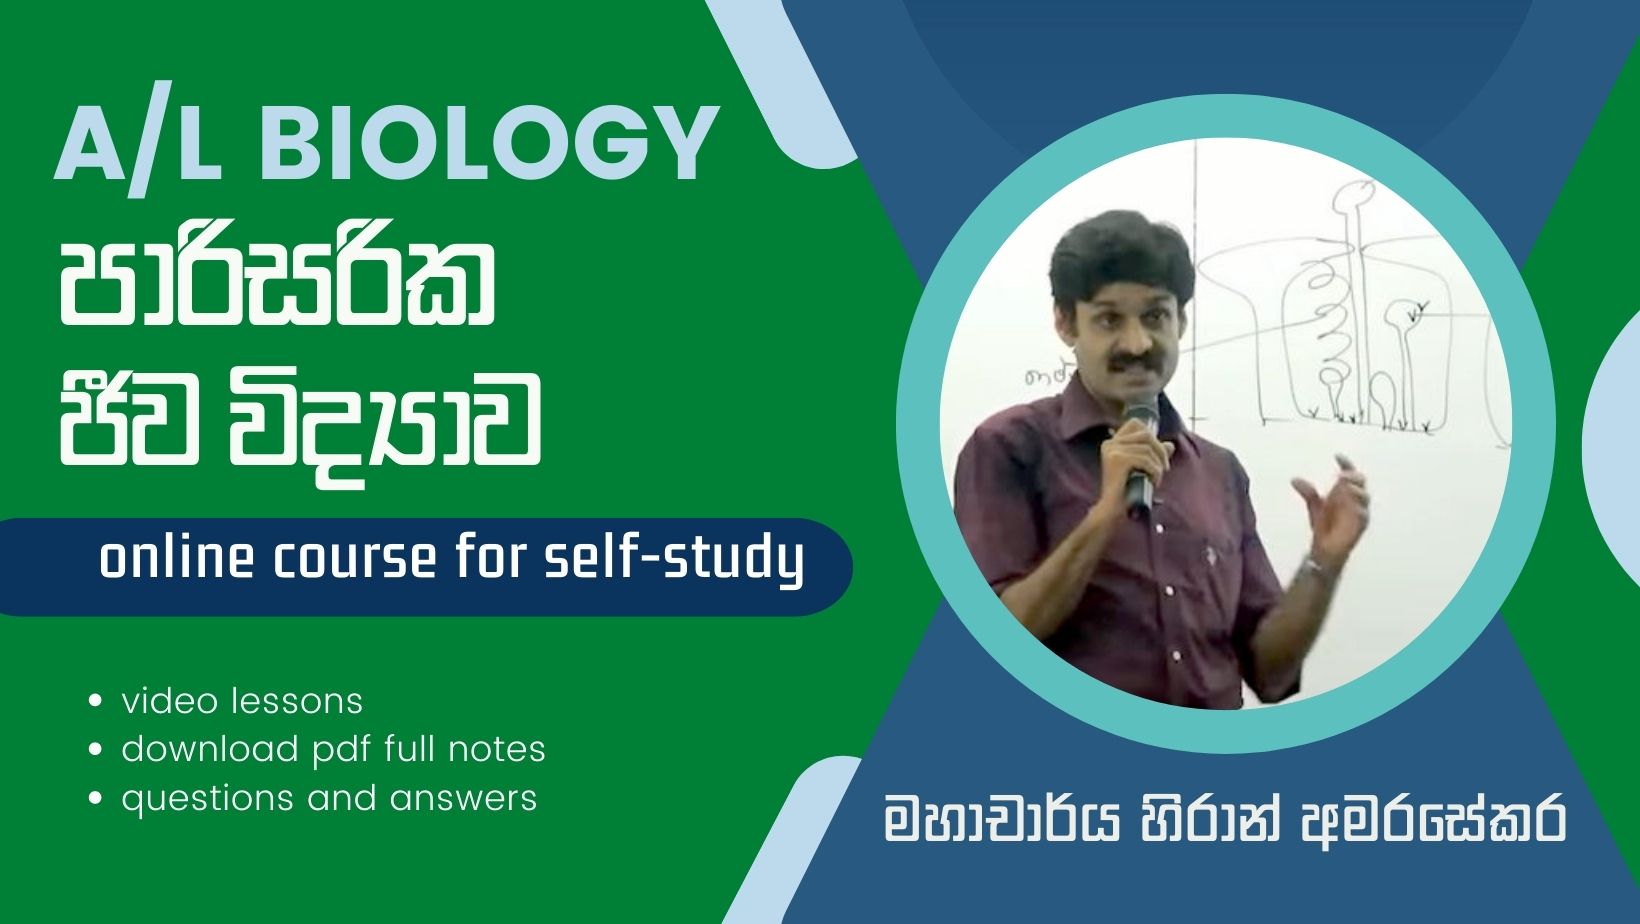 A/L Environmental Biology online video course by Prof Hiran Amarasekera